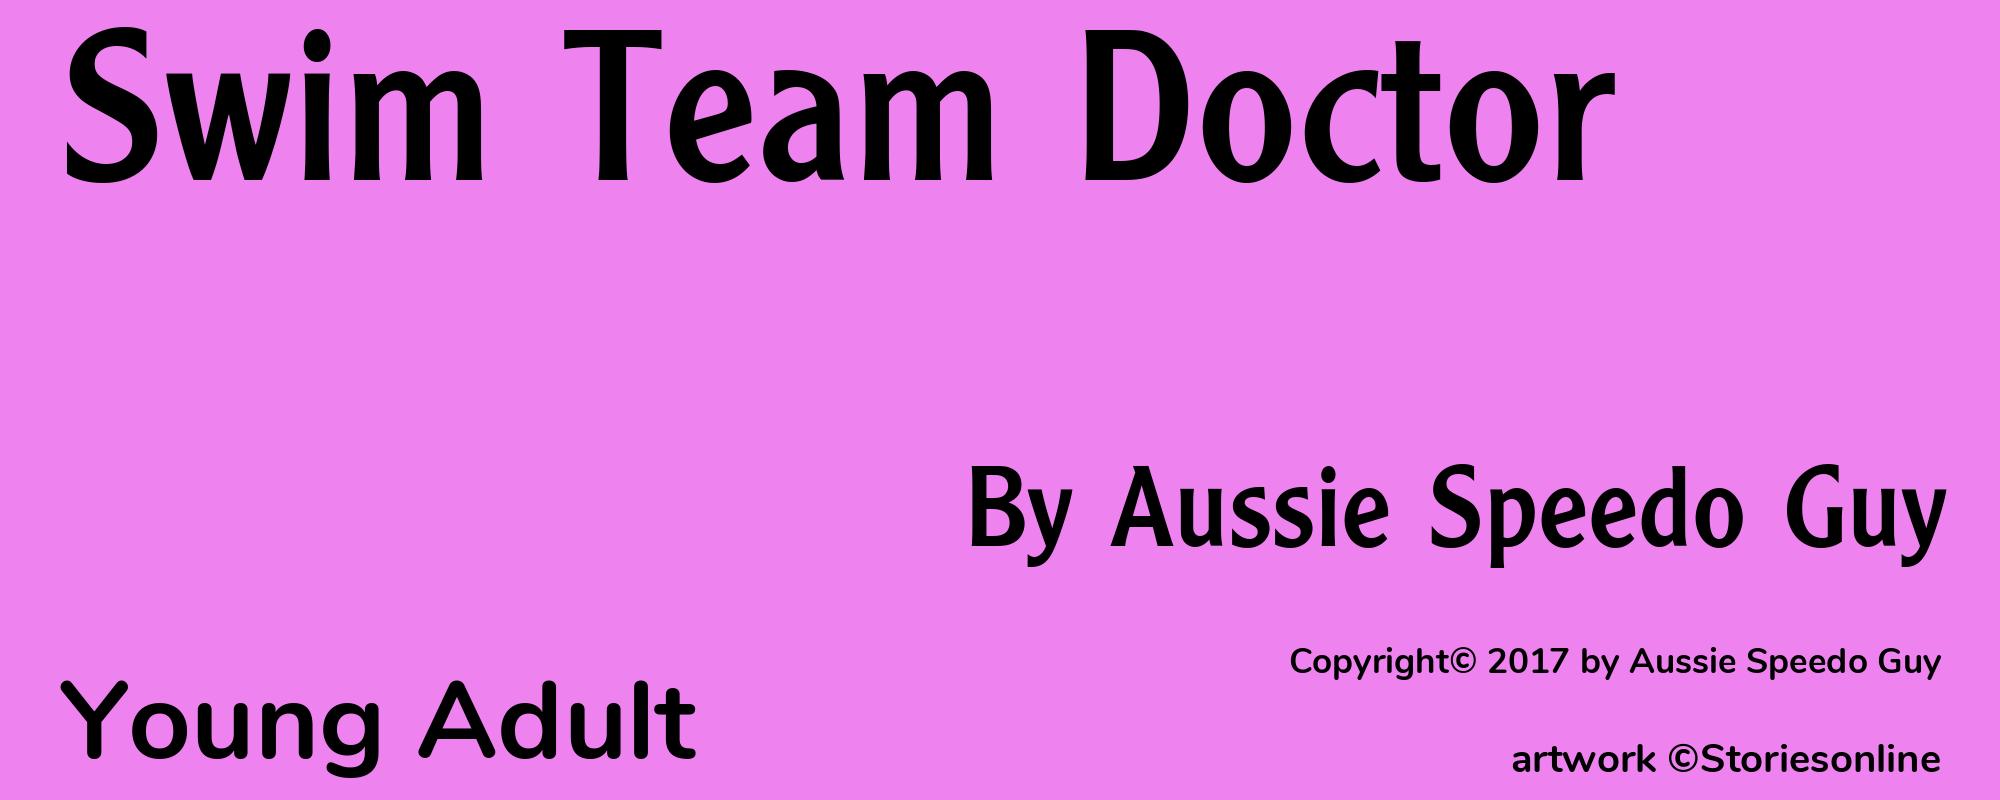 Swim Team Doctor - Cover